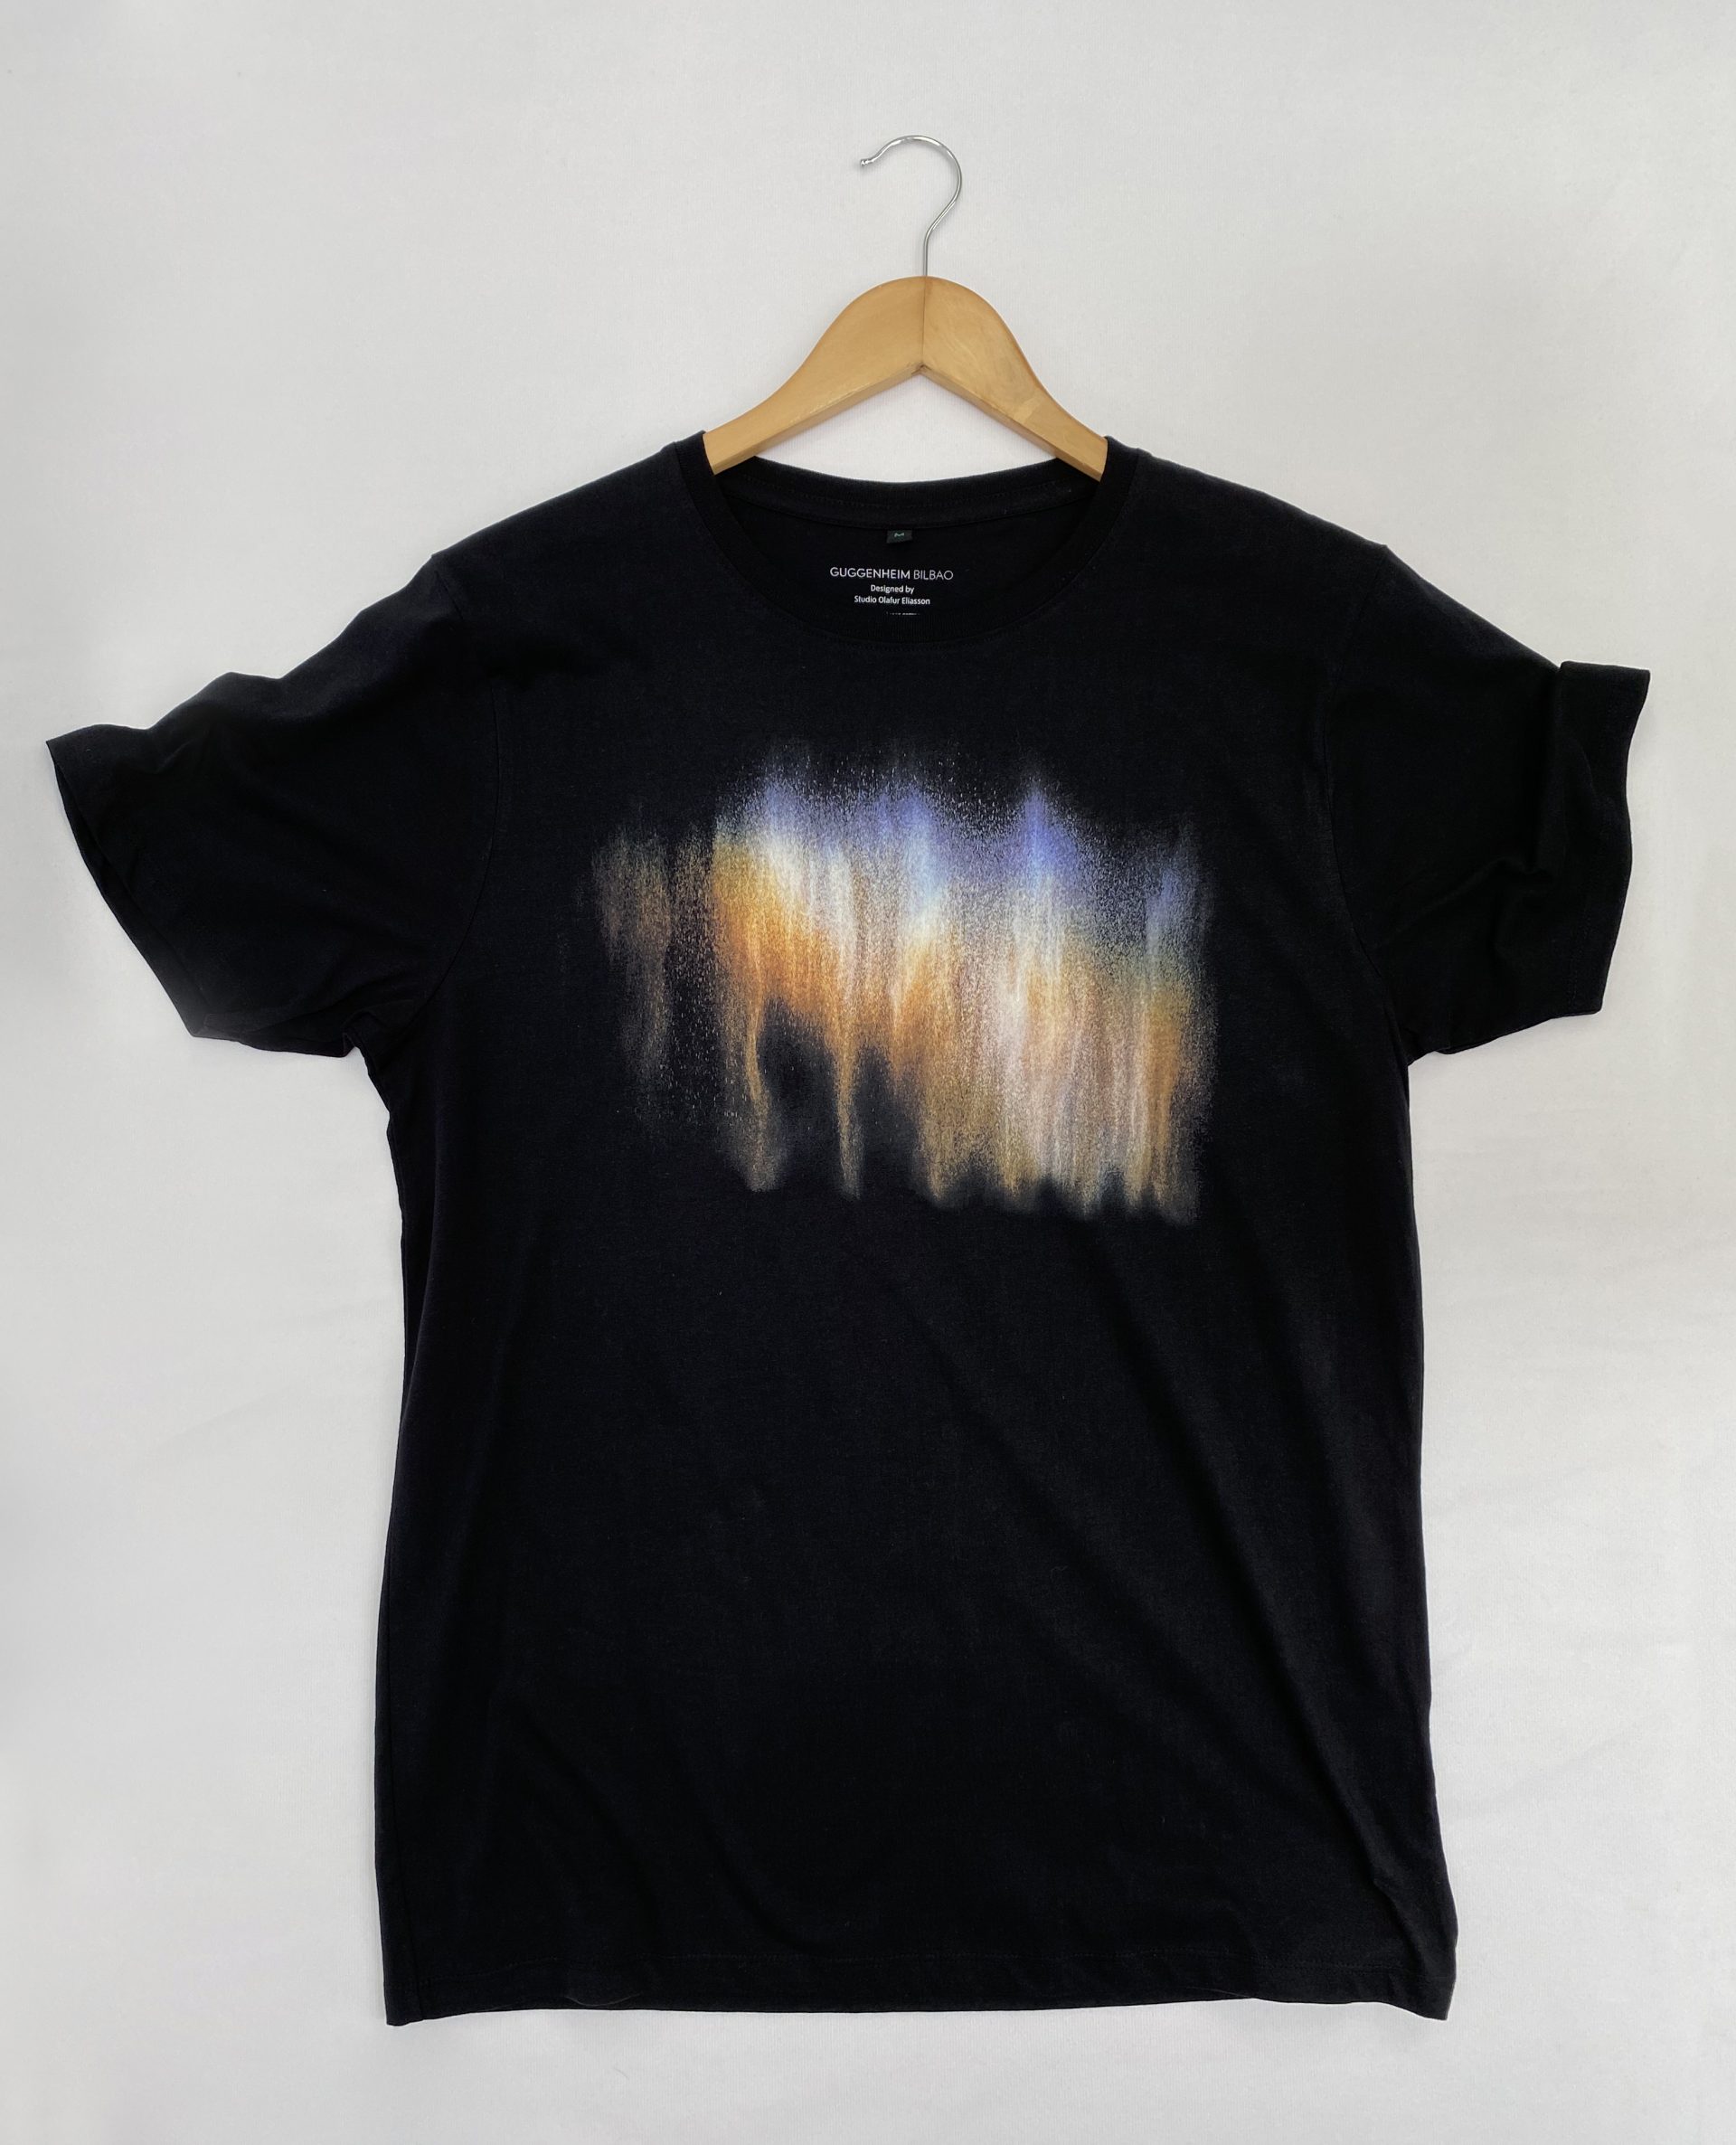 Guggenheim Bilbao Eliasson t-shirt print on demand